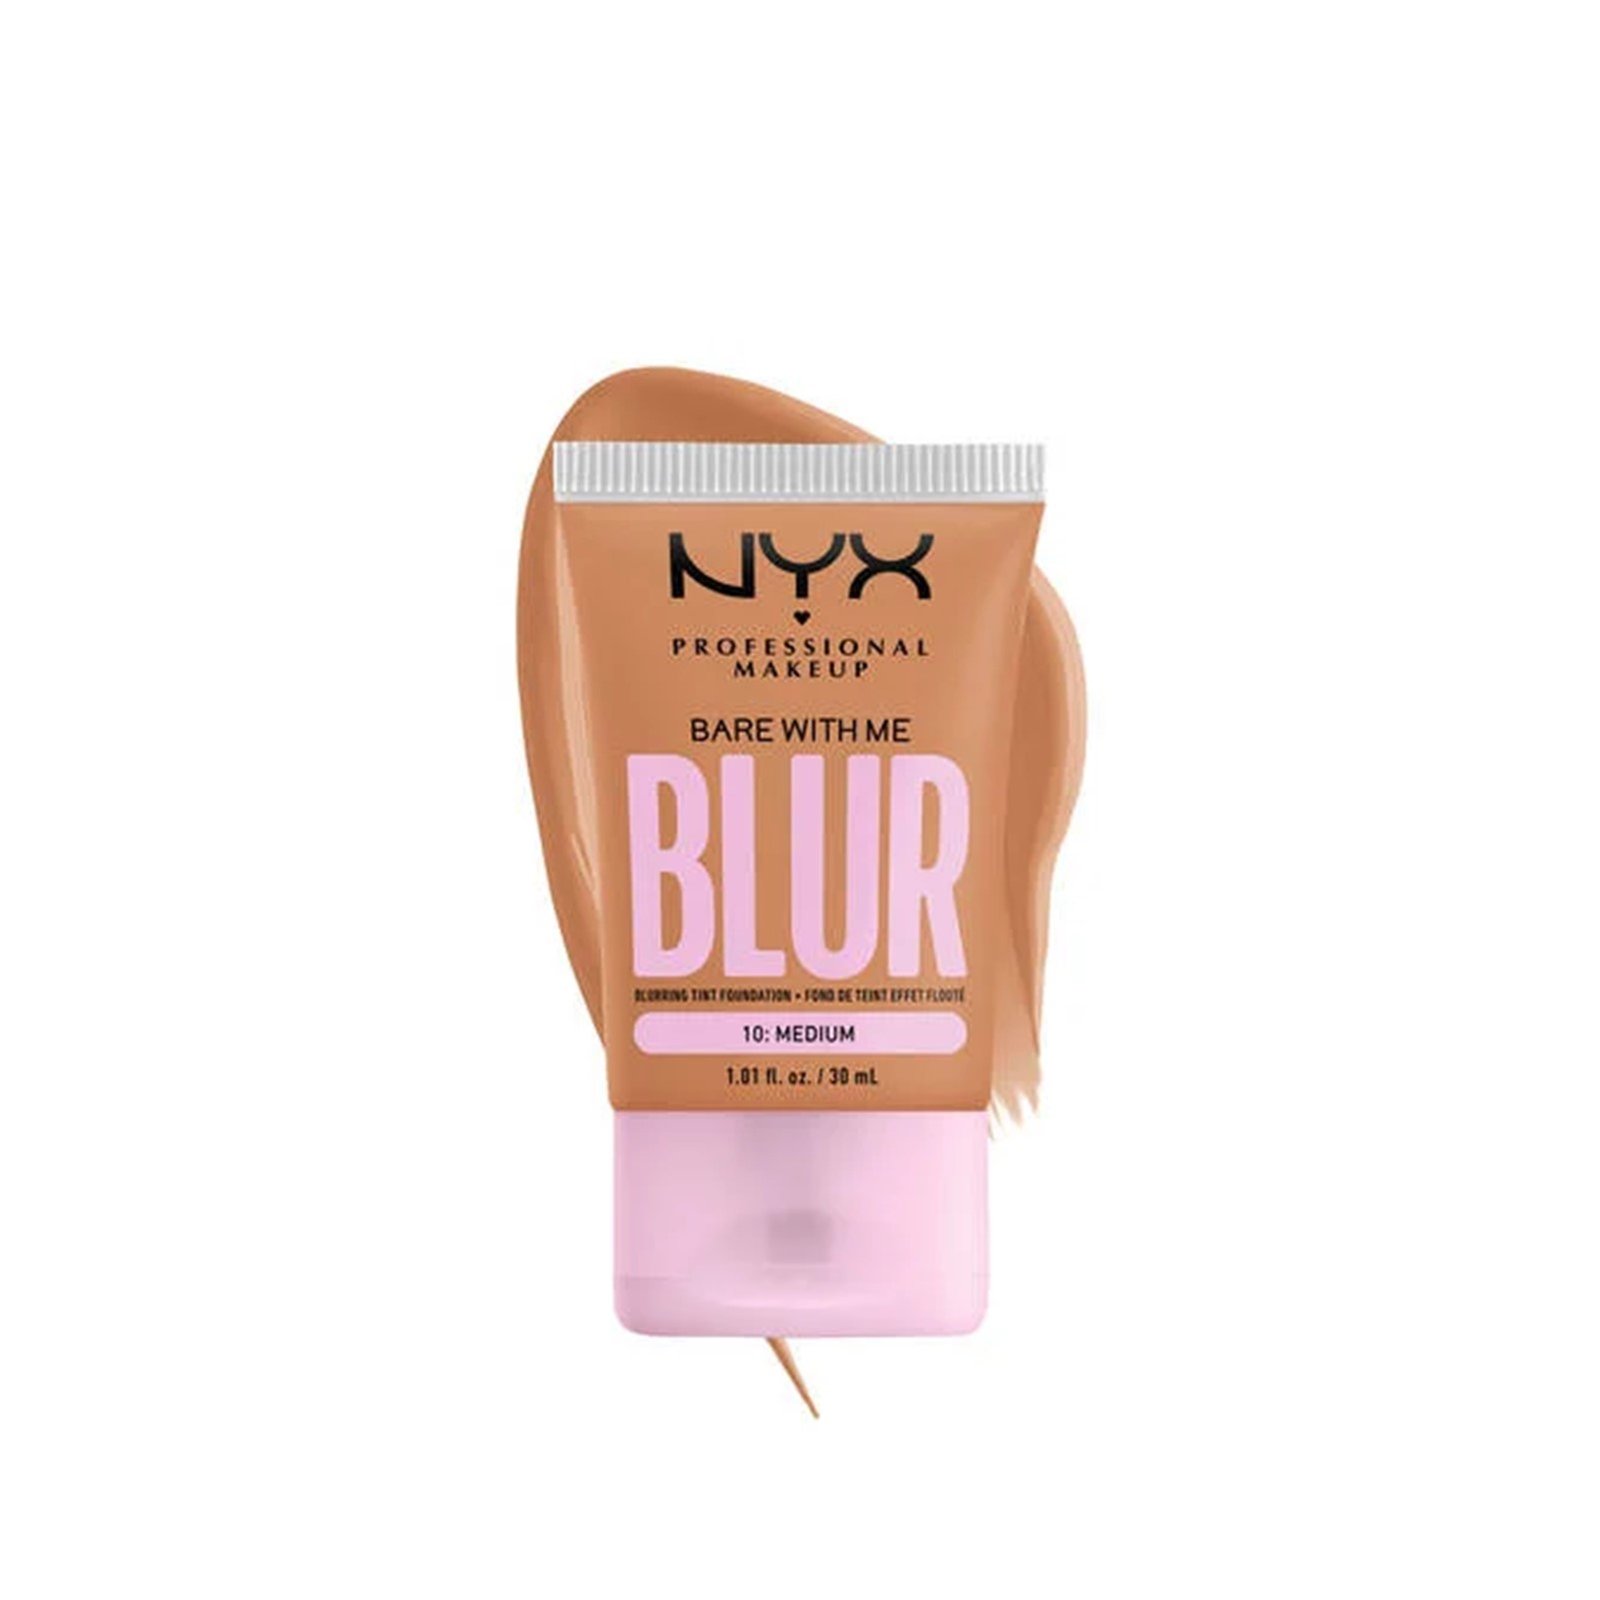 NYX Pro Makeup Bare With Me Blur Tint Foundation 10 Medium 30ml (1.01 fl oz)